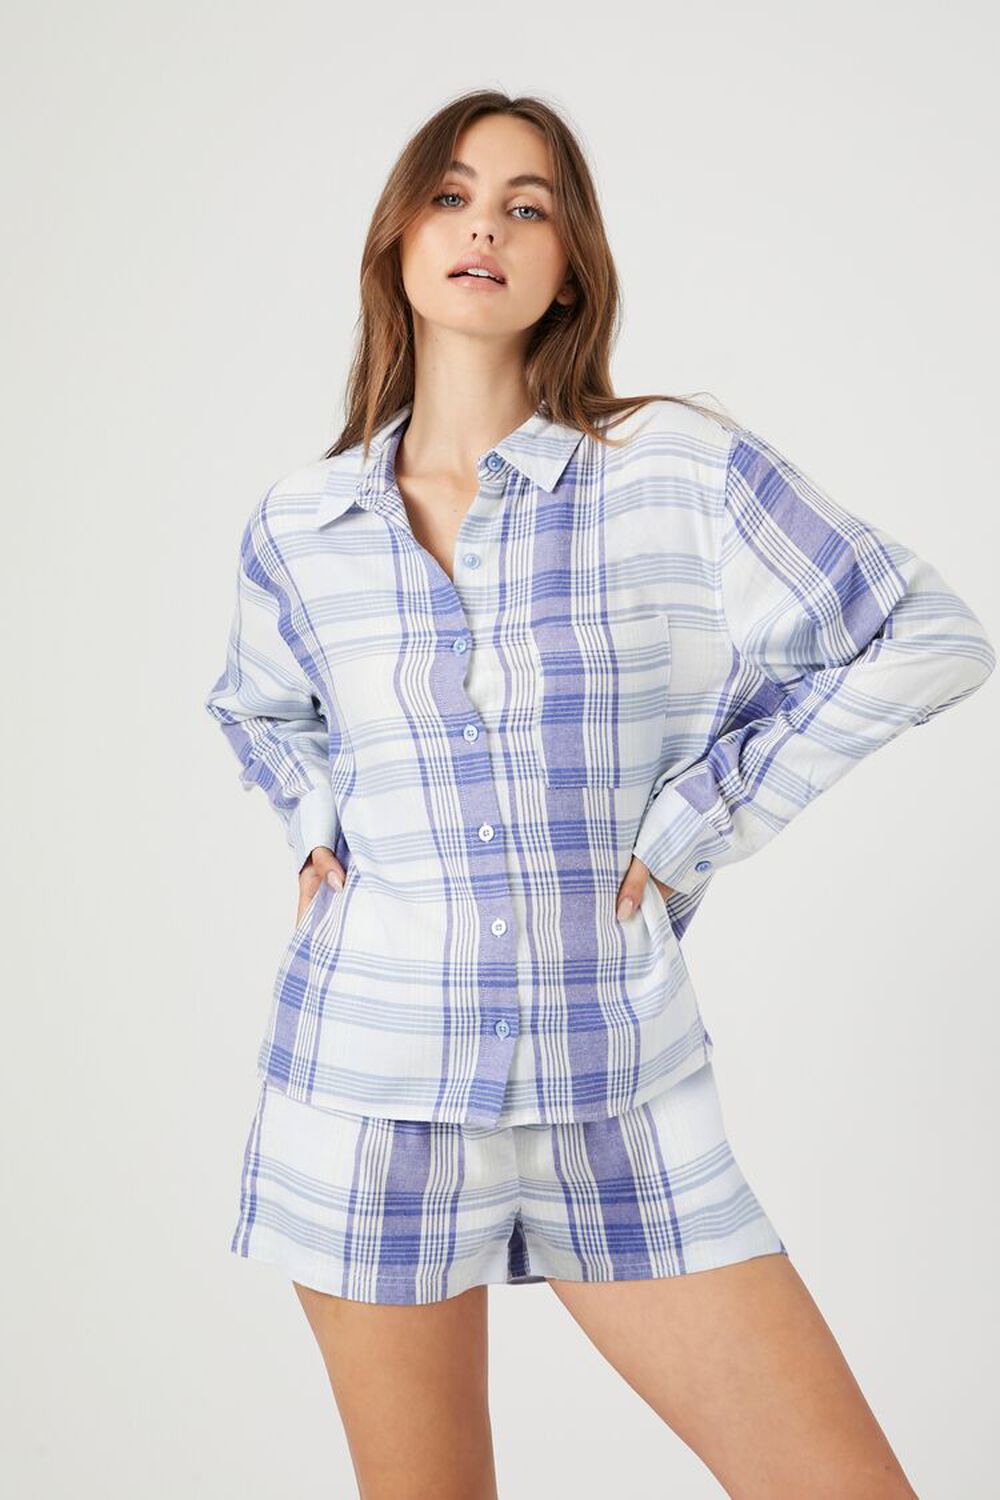 CHARMOUR - Women's Two Piece Micropolar Flannel Pajama Set with